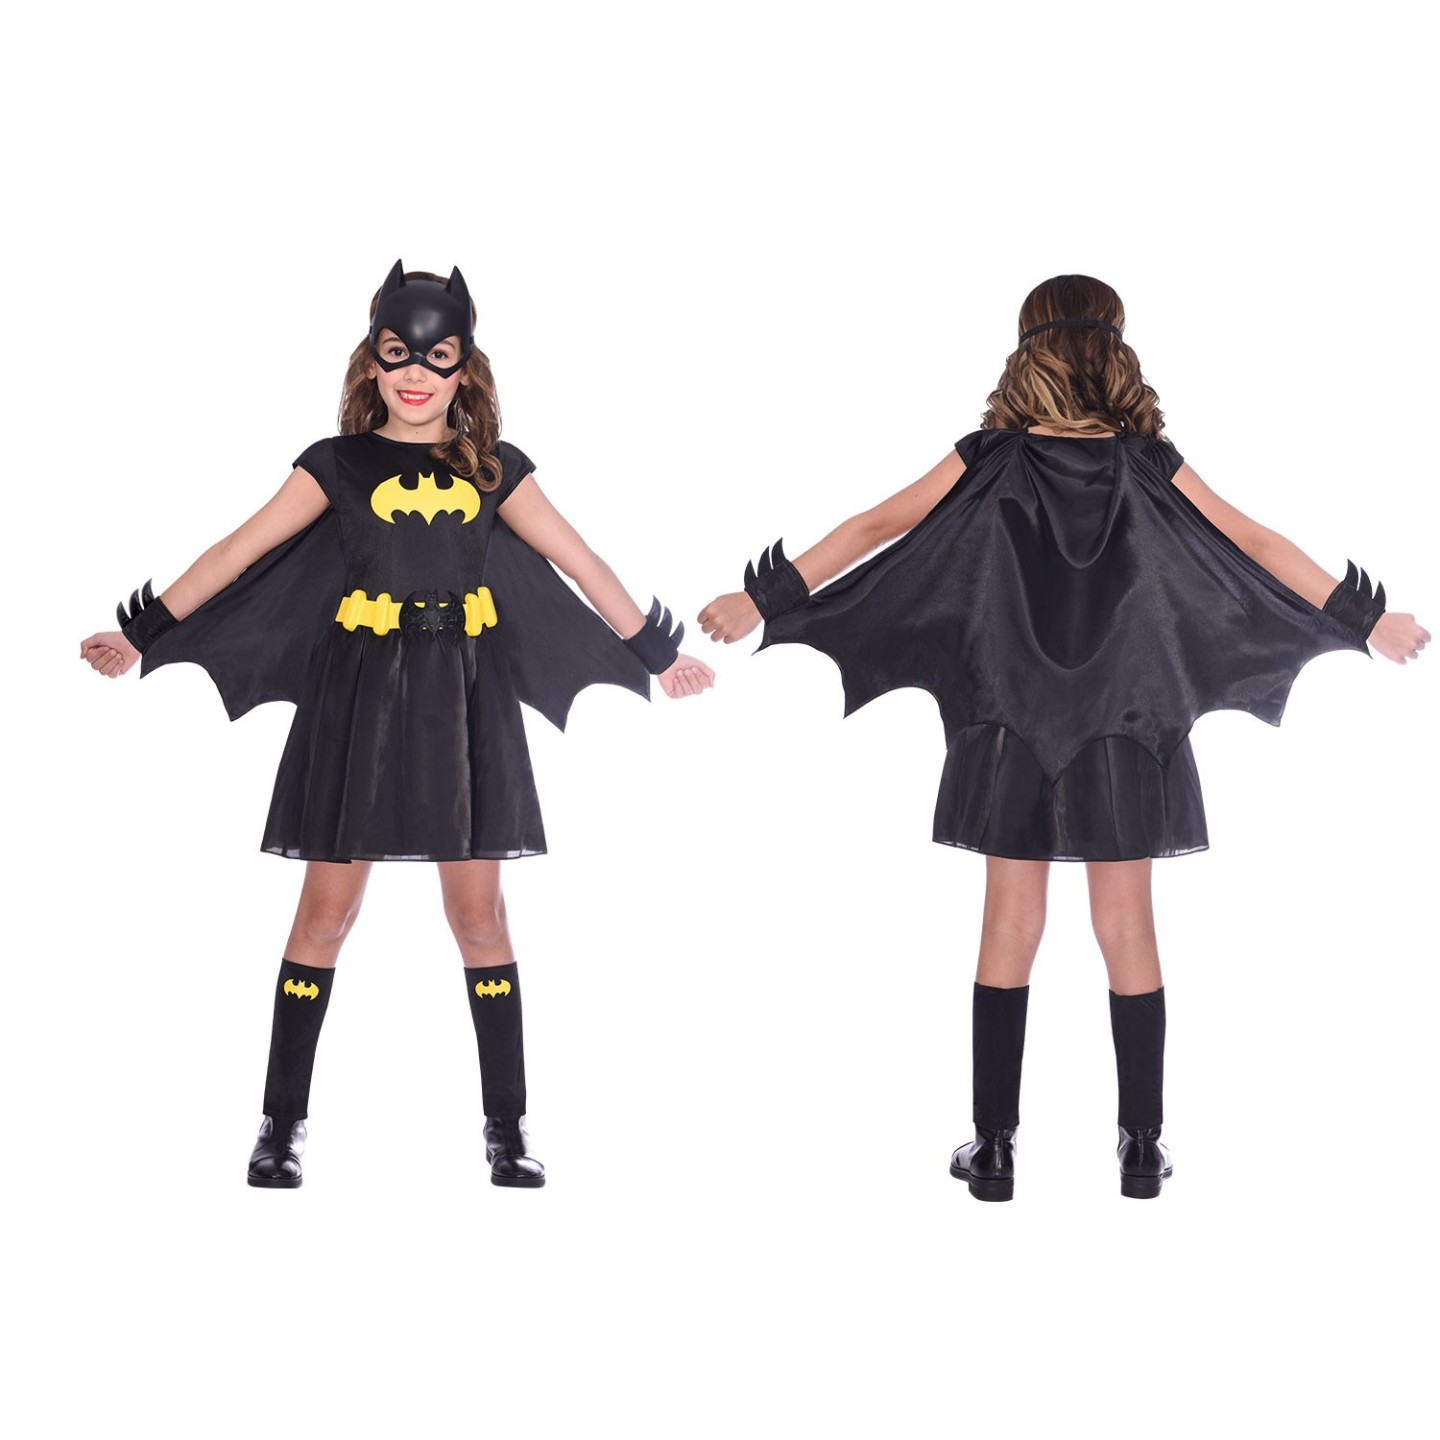 Geletterdheid Site lijn Weg Batgirl kostuum kind | Jokershop.be - Superhelden kleding